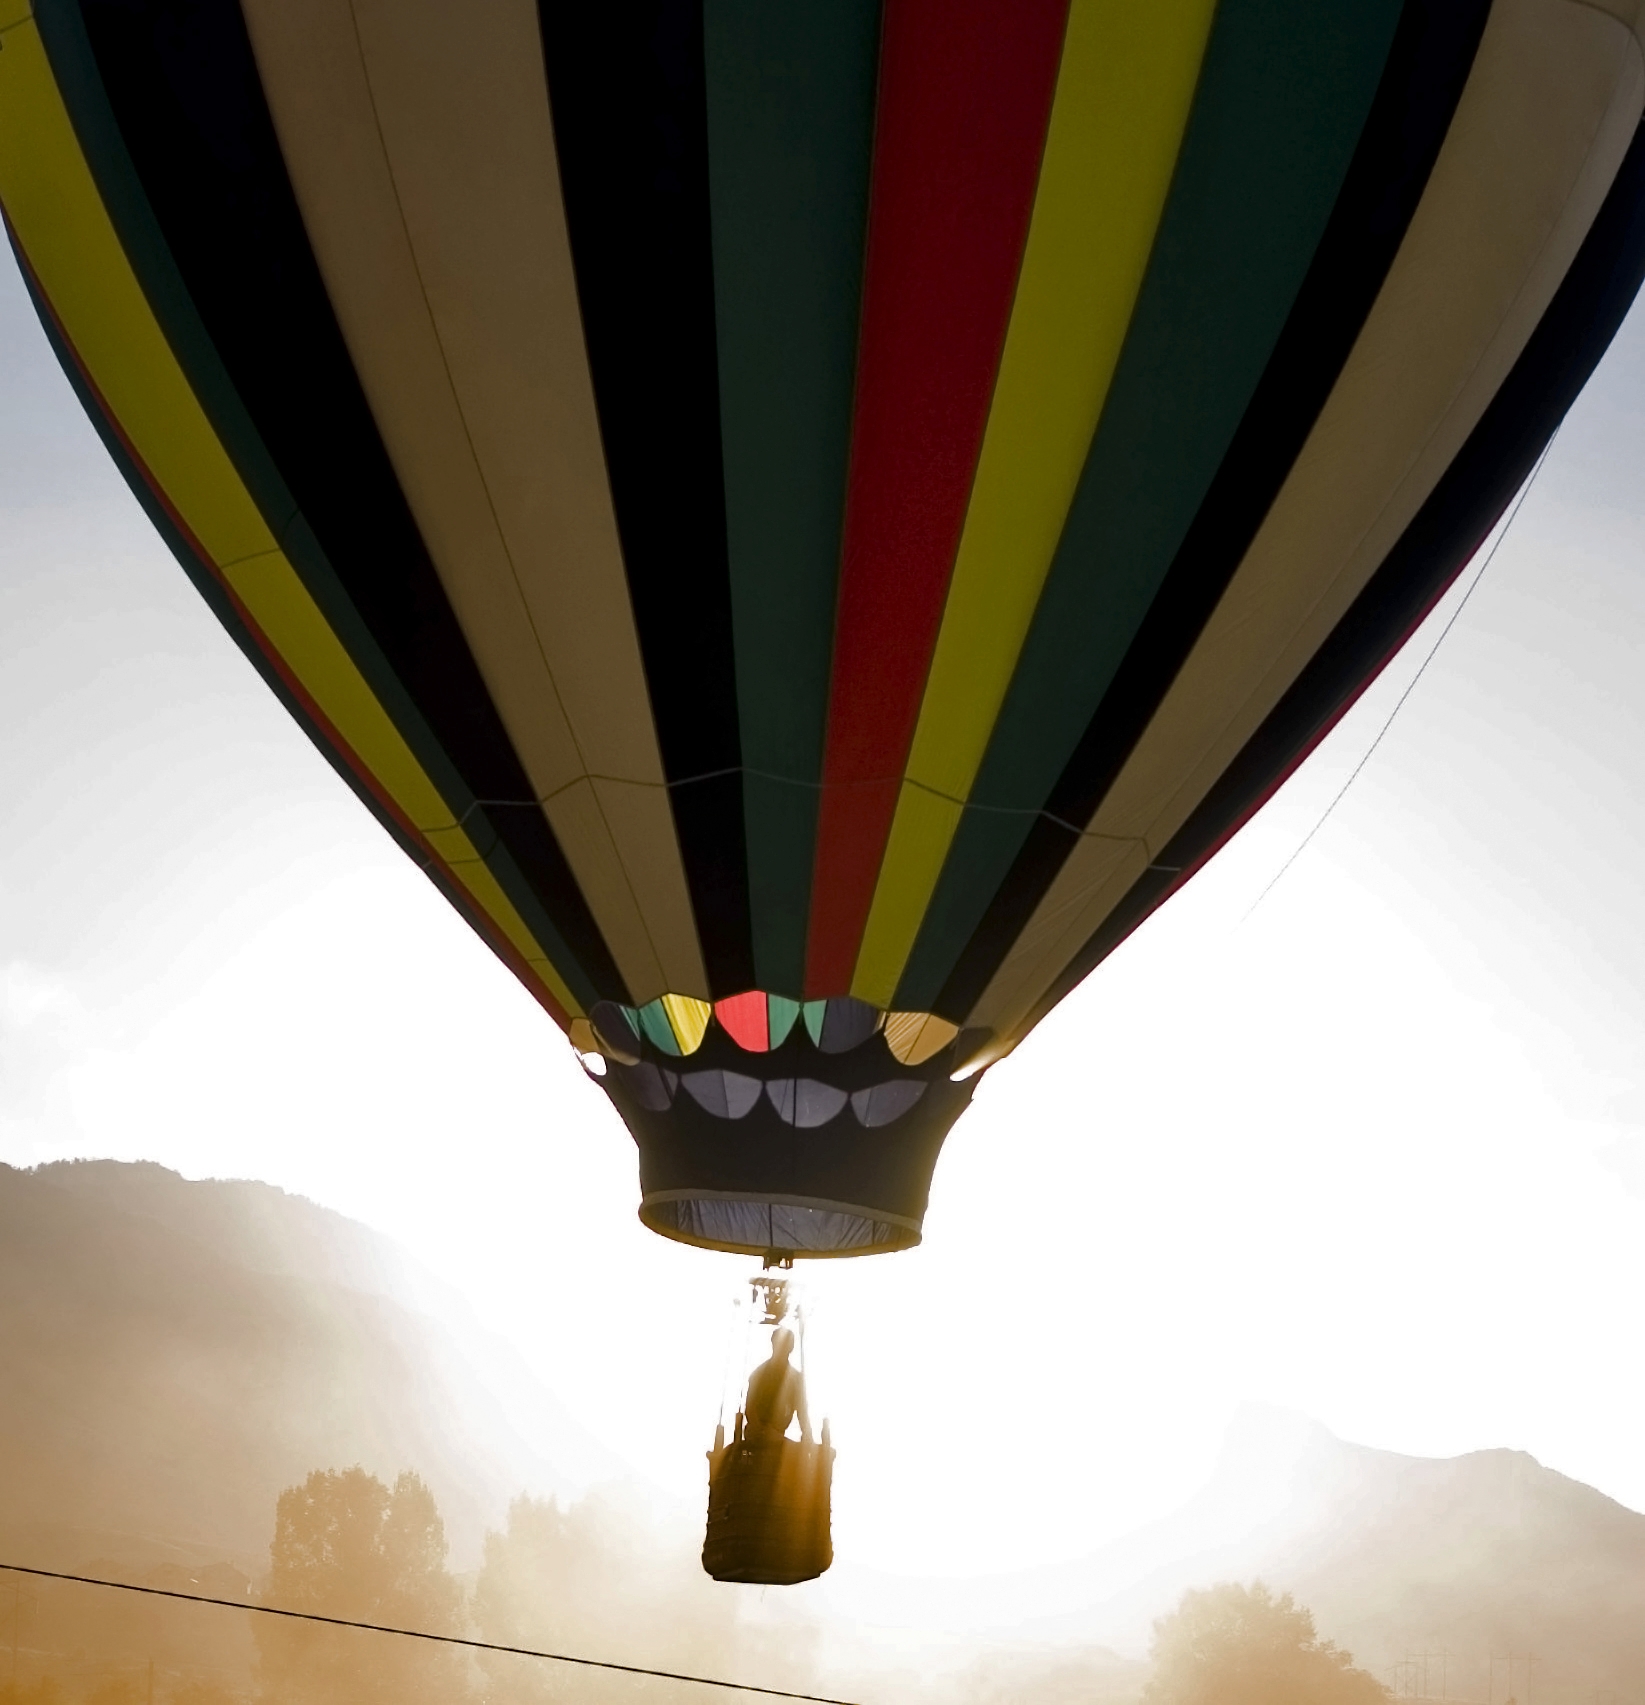 Hot air balloon ride at sunrise